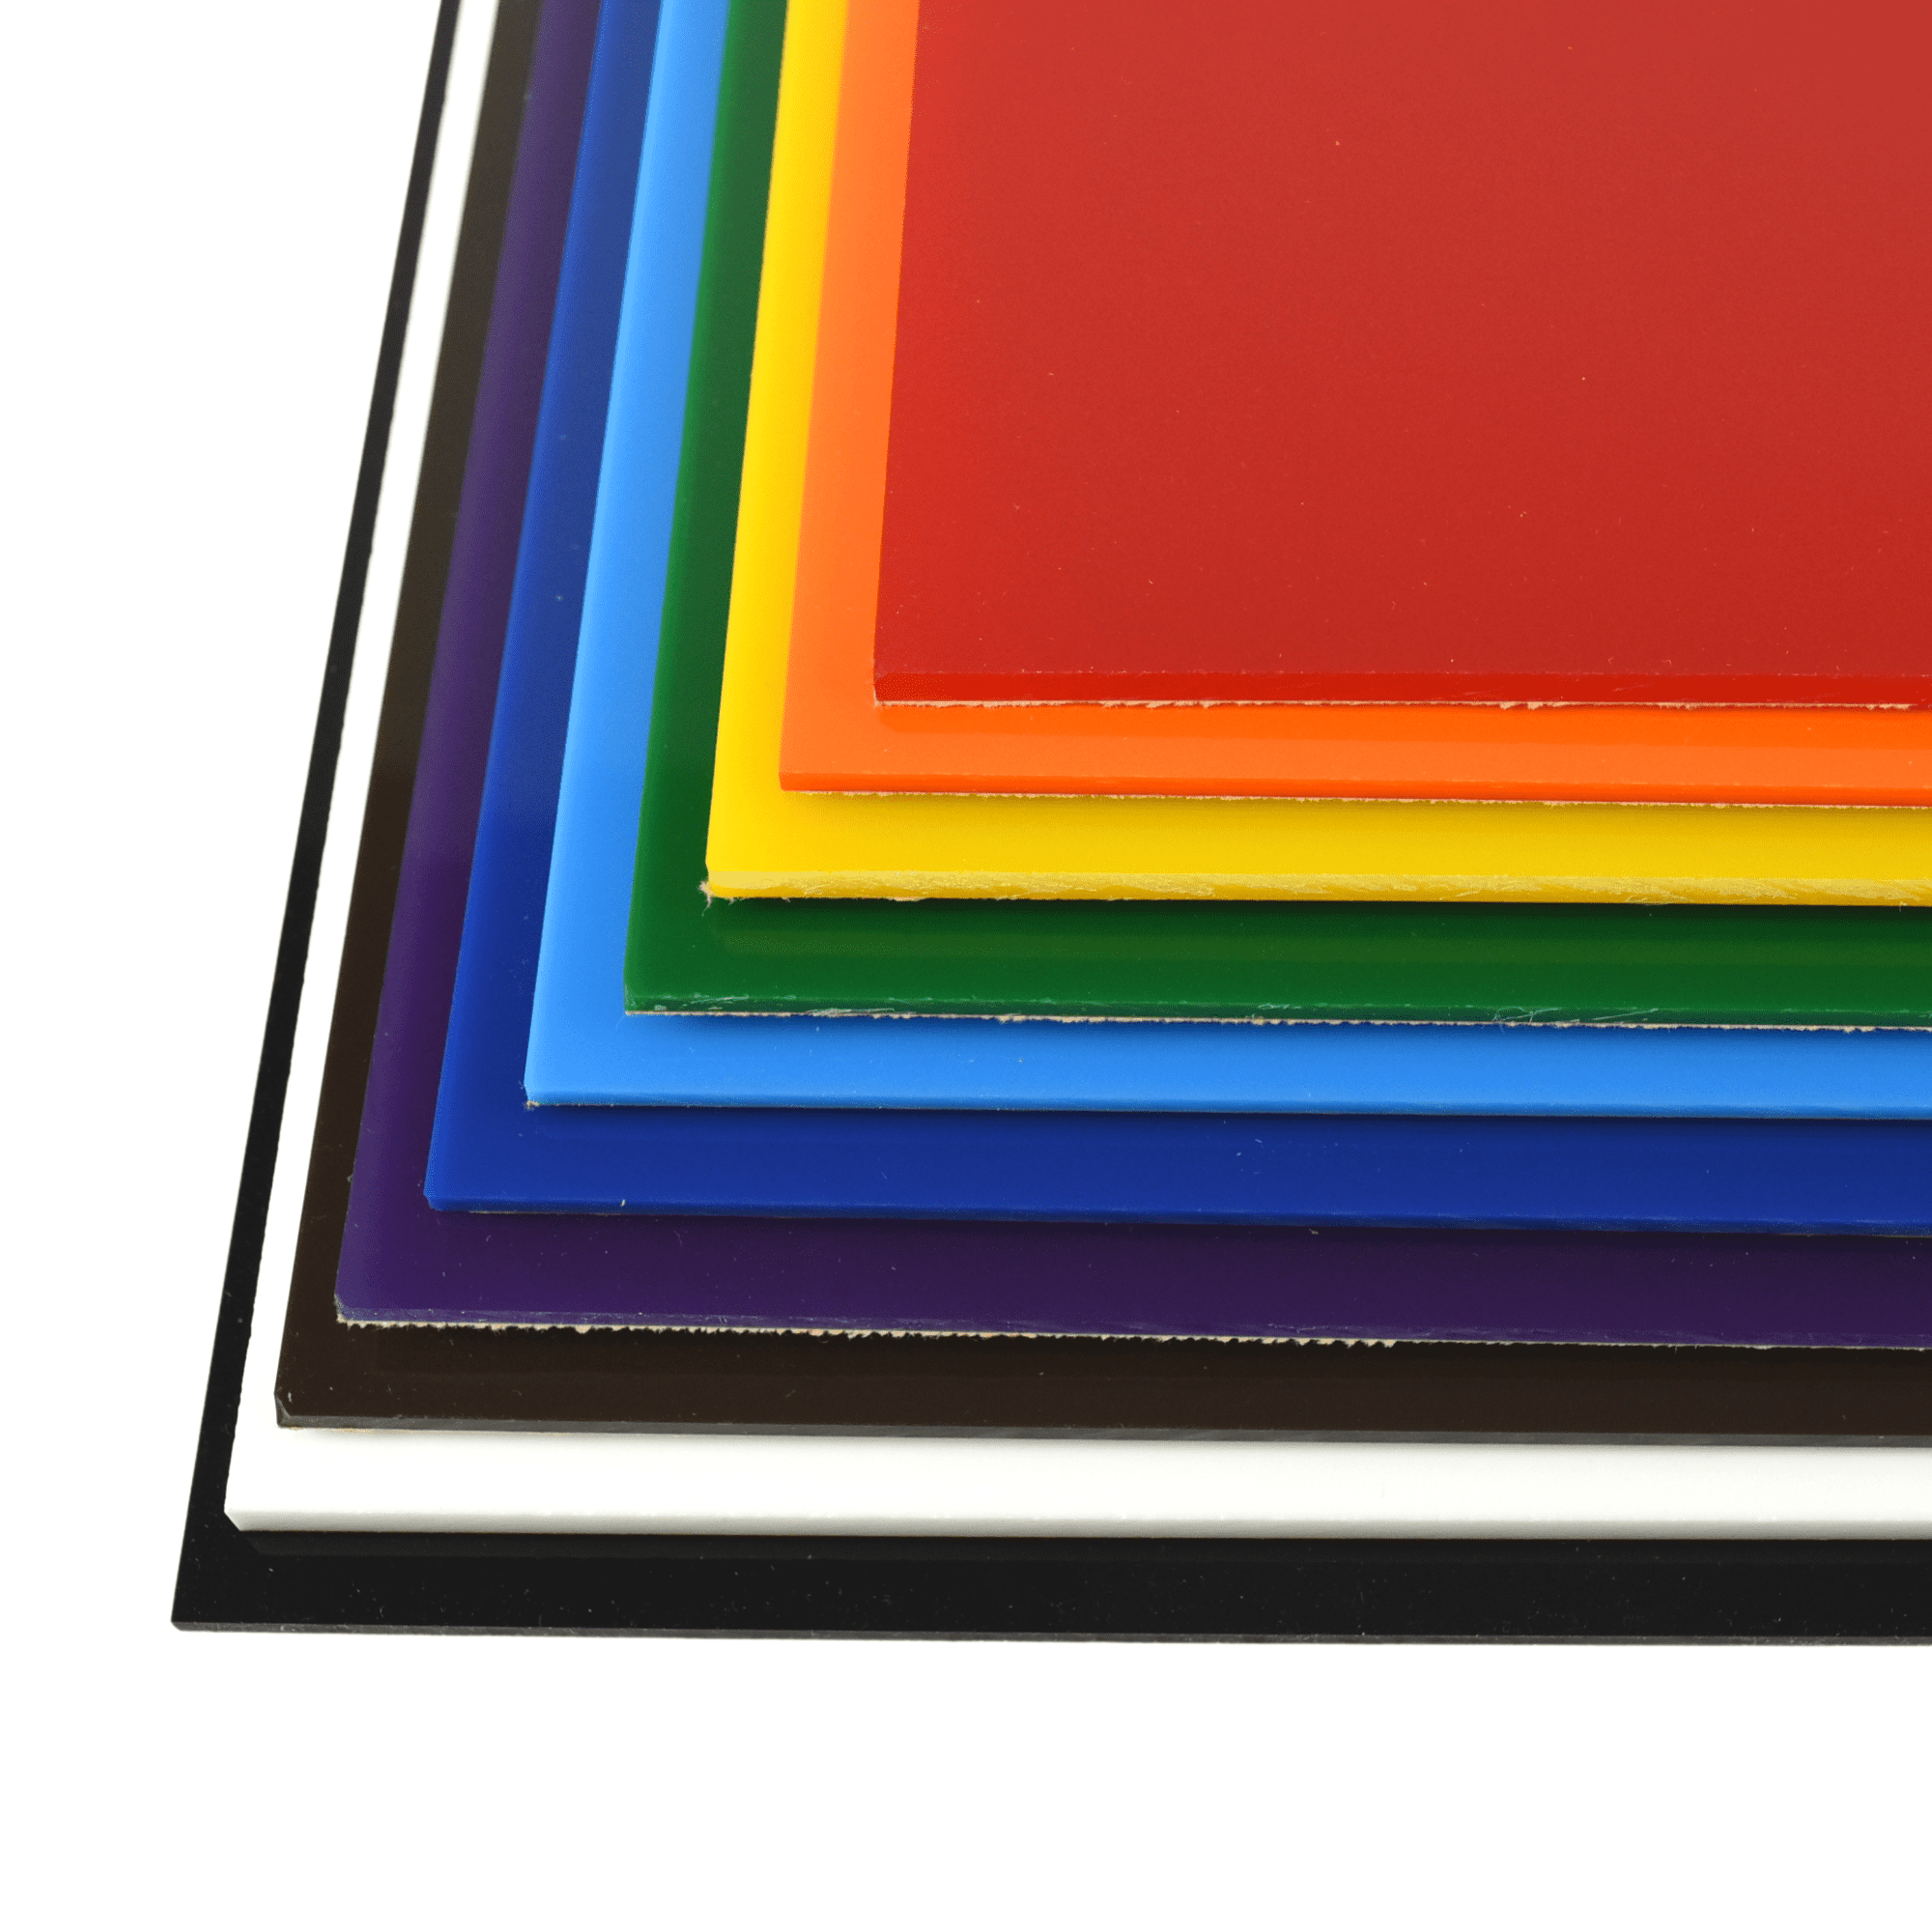 Opaque White Acrylic Plexiglass sheet 1/8" x 24" x 24" #7508 